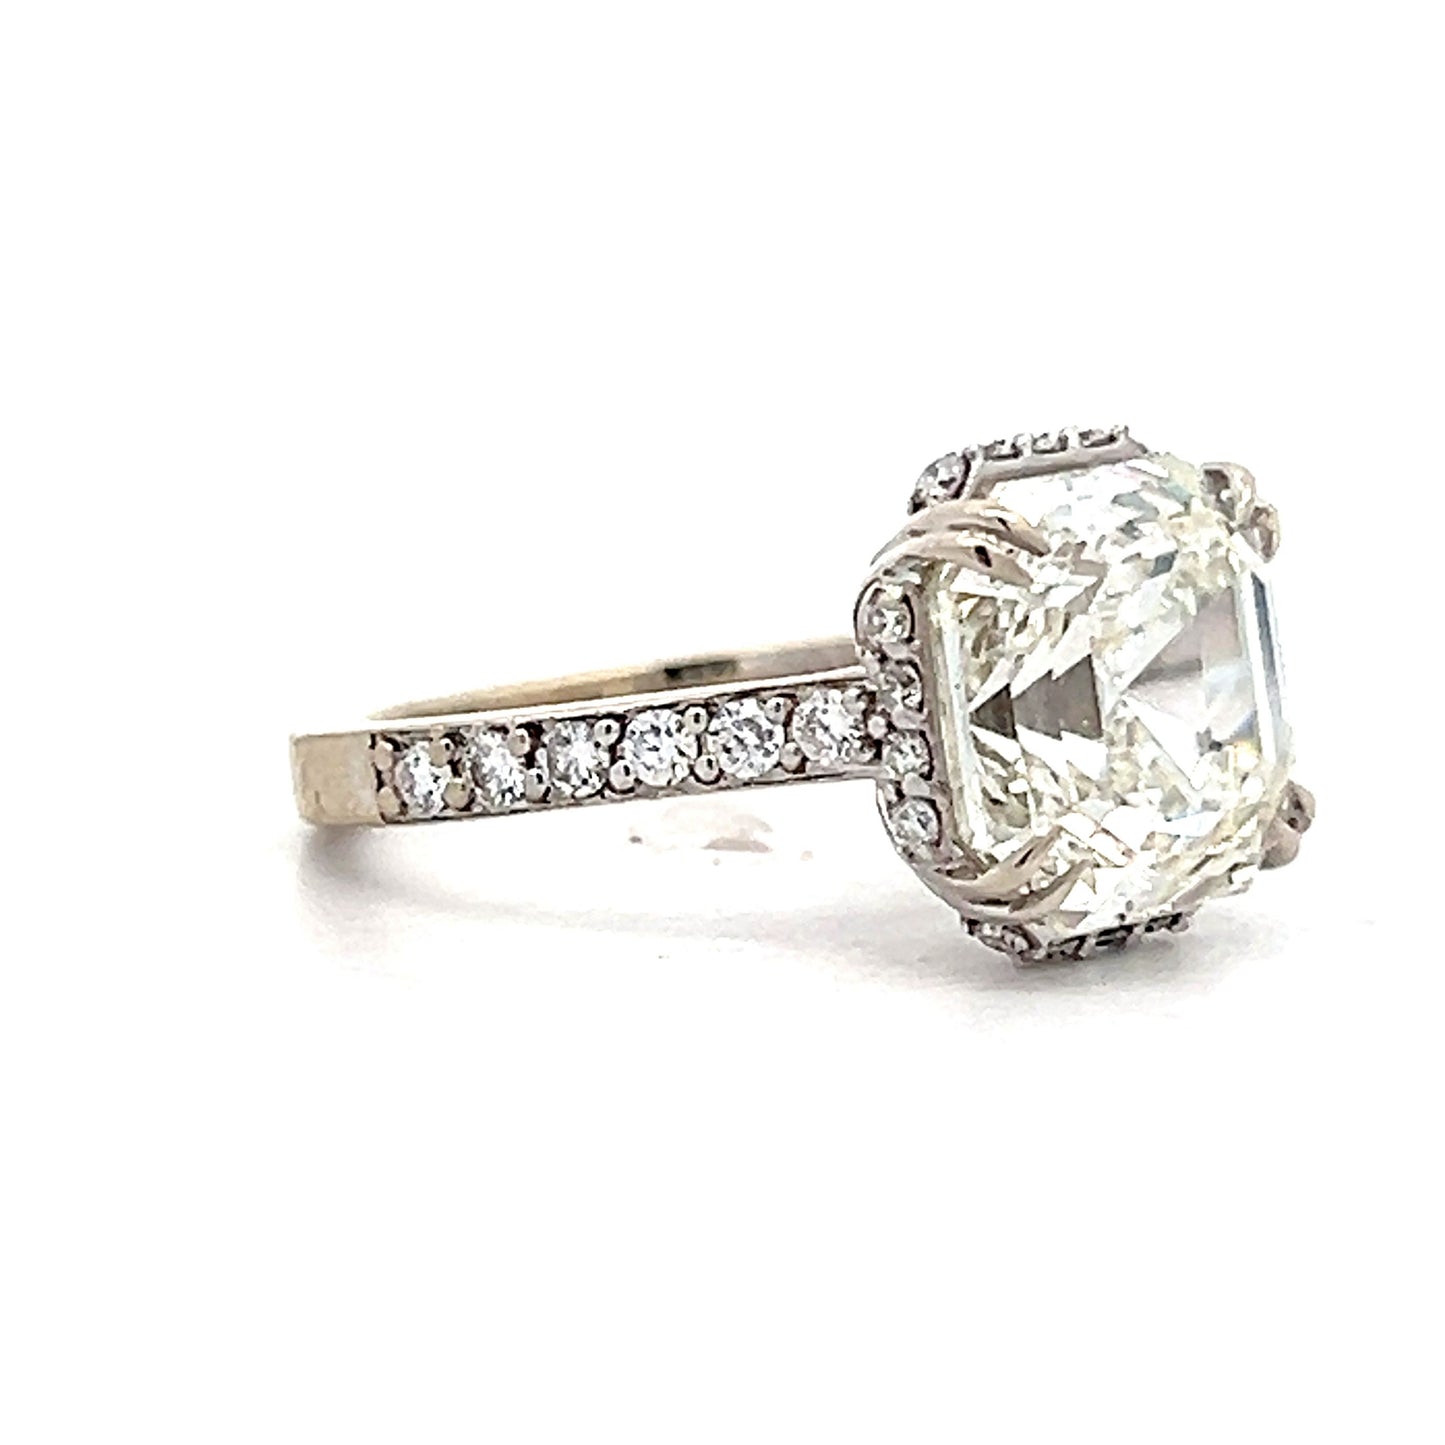 5.04 Asscher Cut Diamond Engagement Ring in White Gold